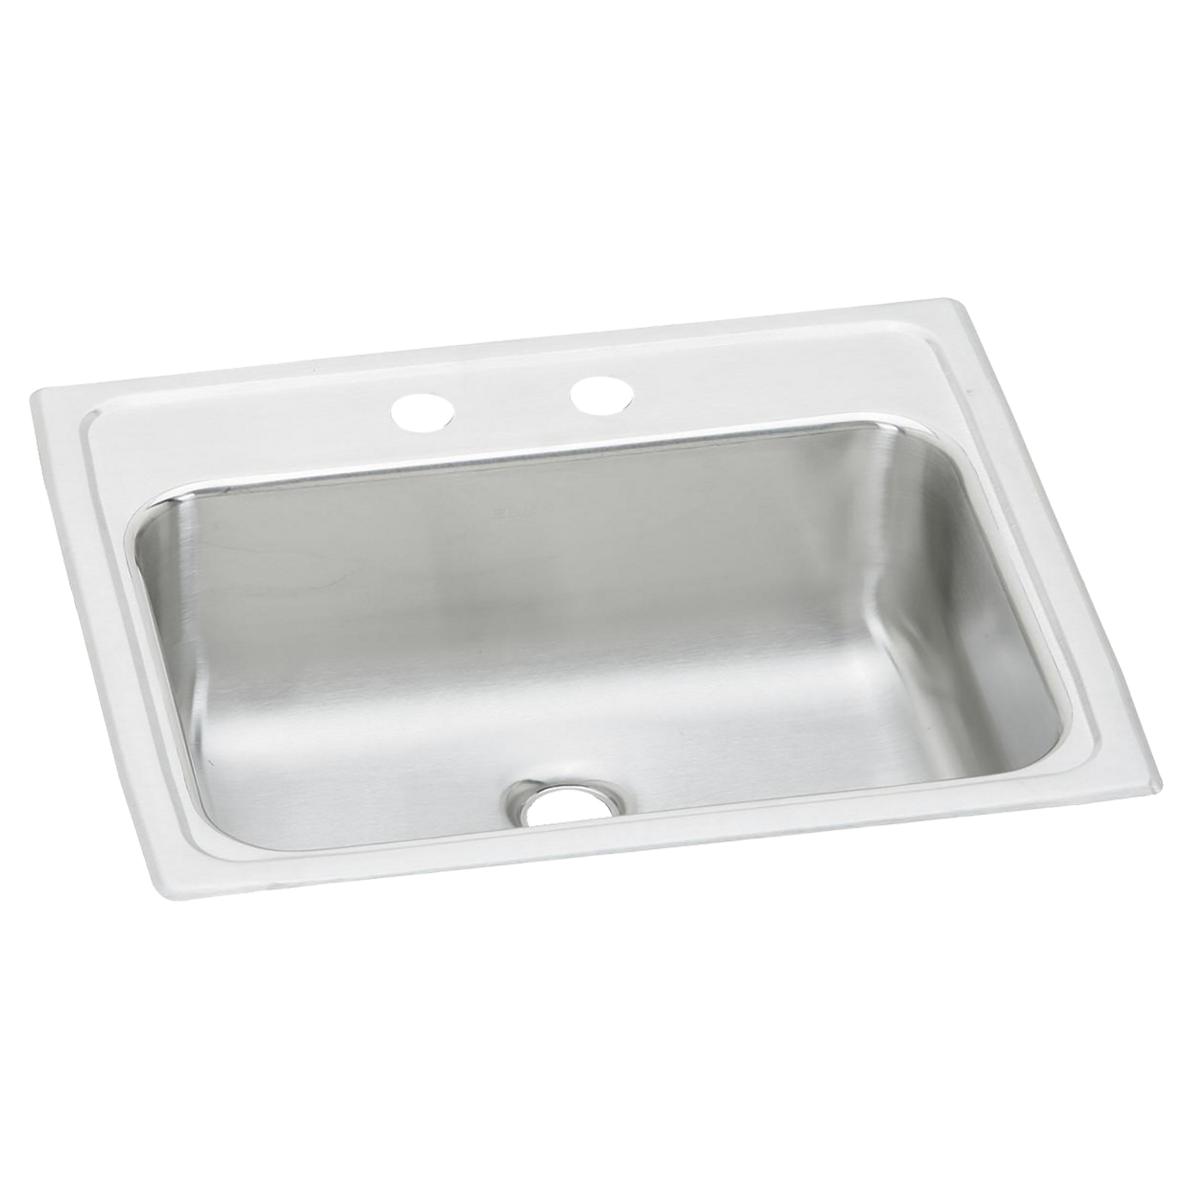 Elkay Celebrity 19" x 17" x 6-1/8" Single Bowl Drop-in Bathroom Sink with Overflow